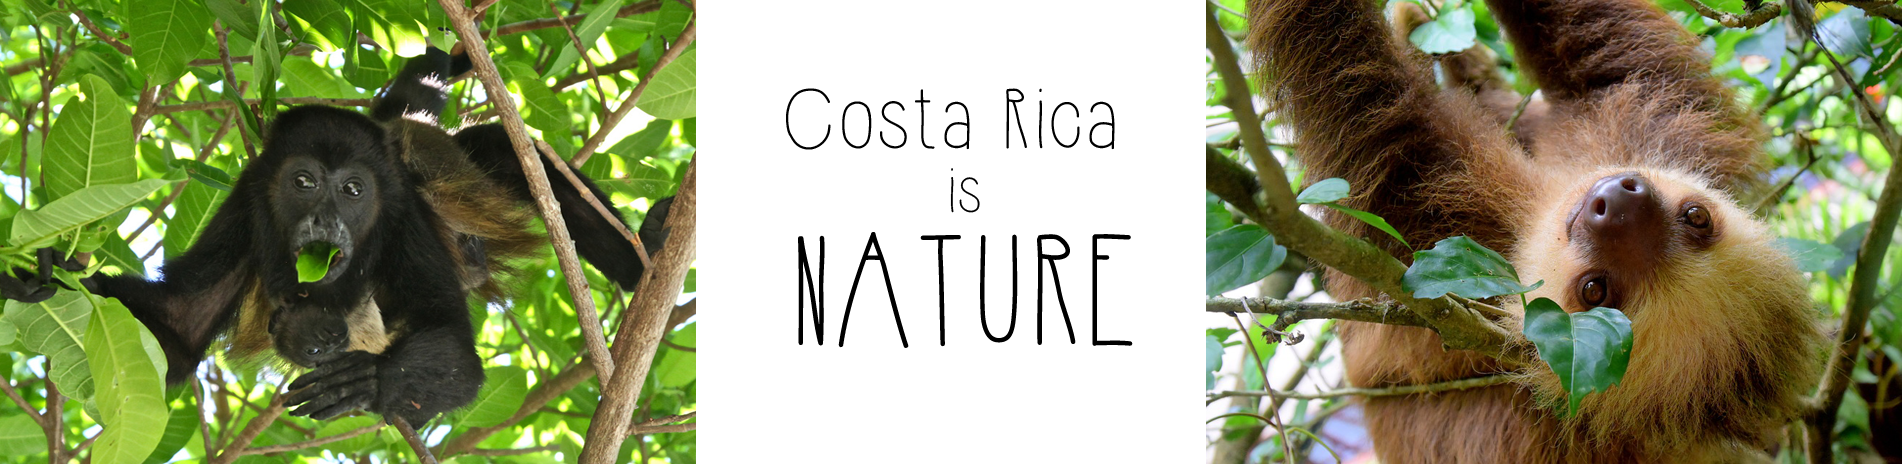 Costa Rica Nature 1